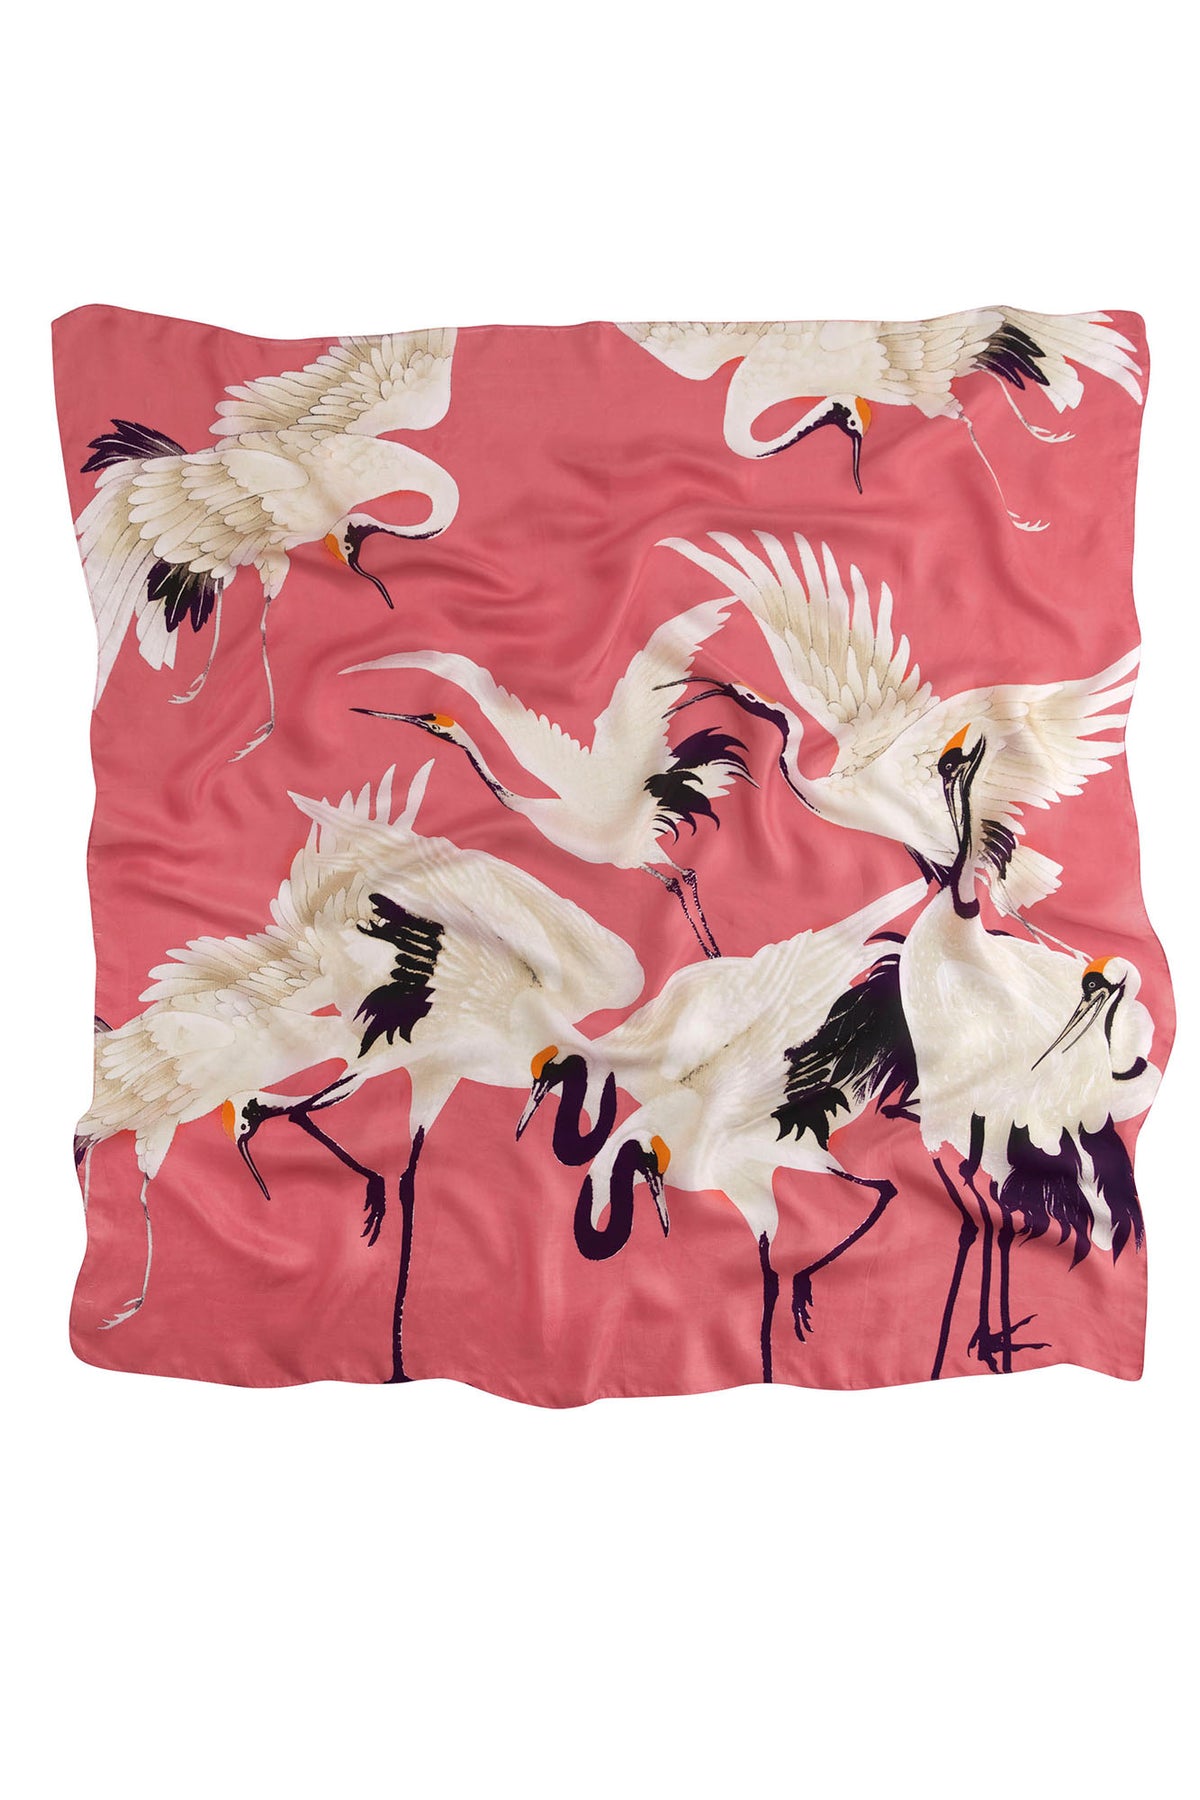 One Hundred Stars - Stork Crane Lipstick Pink Silk Square Scarf